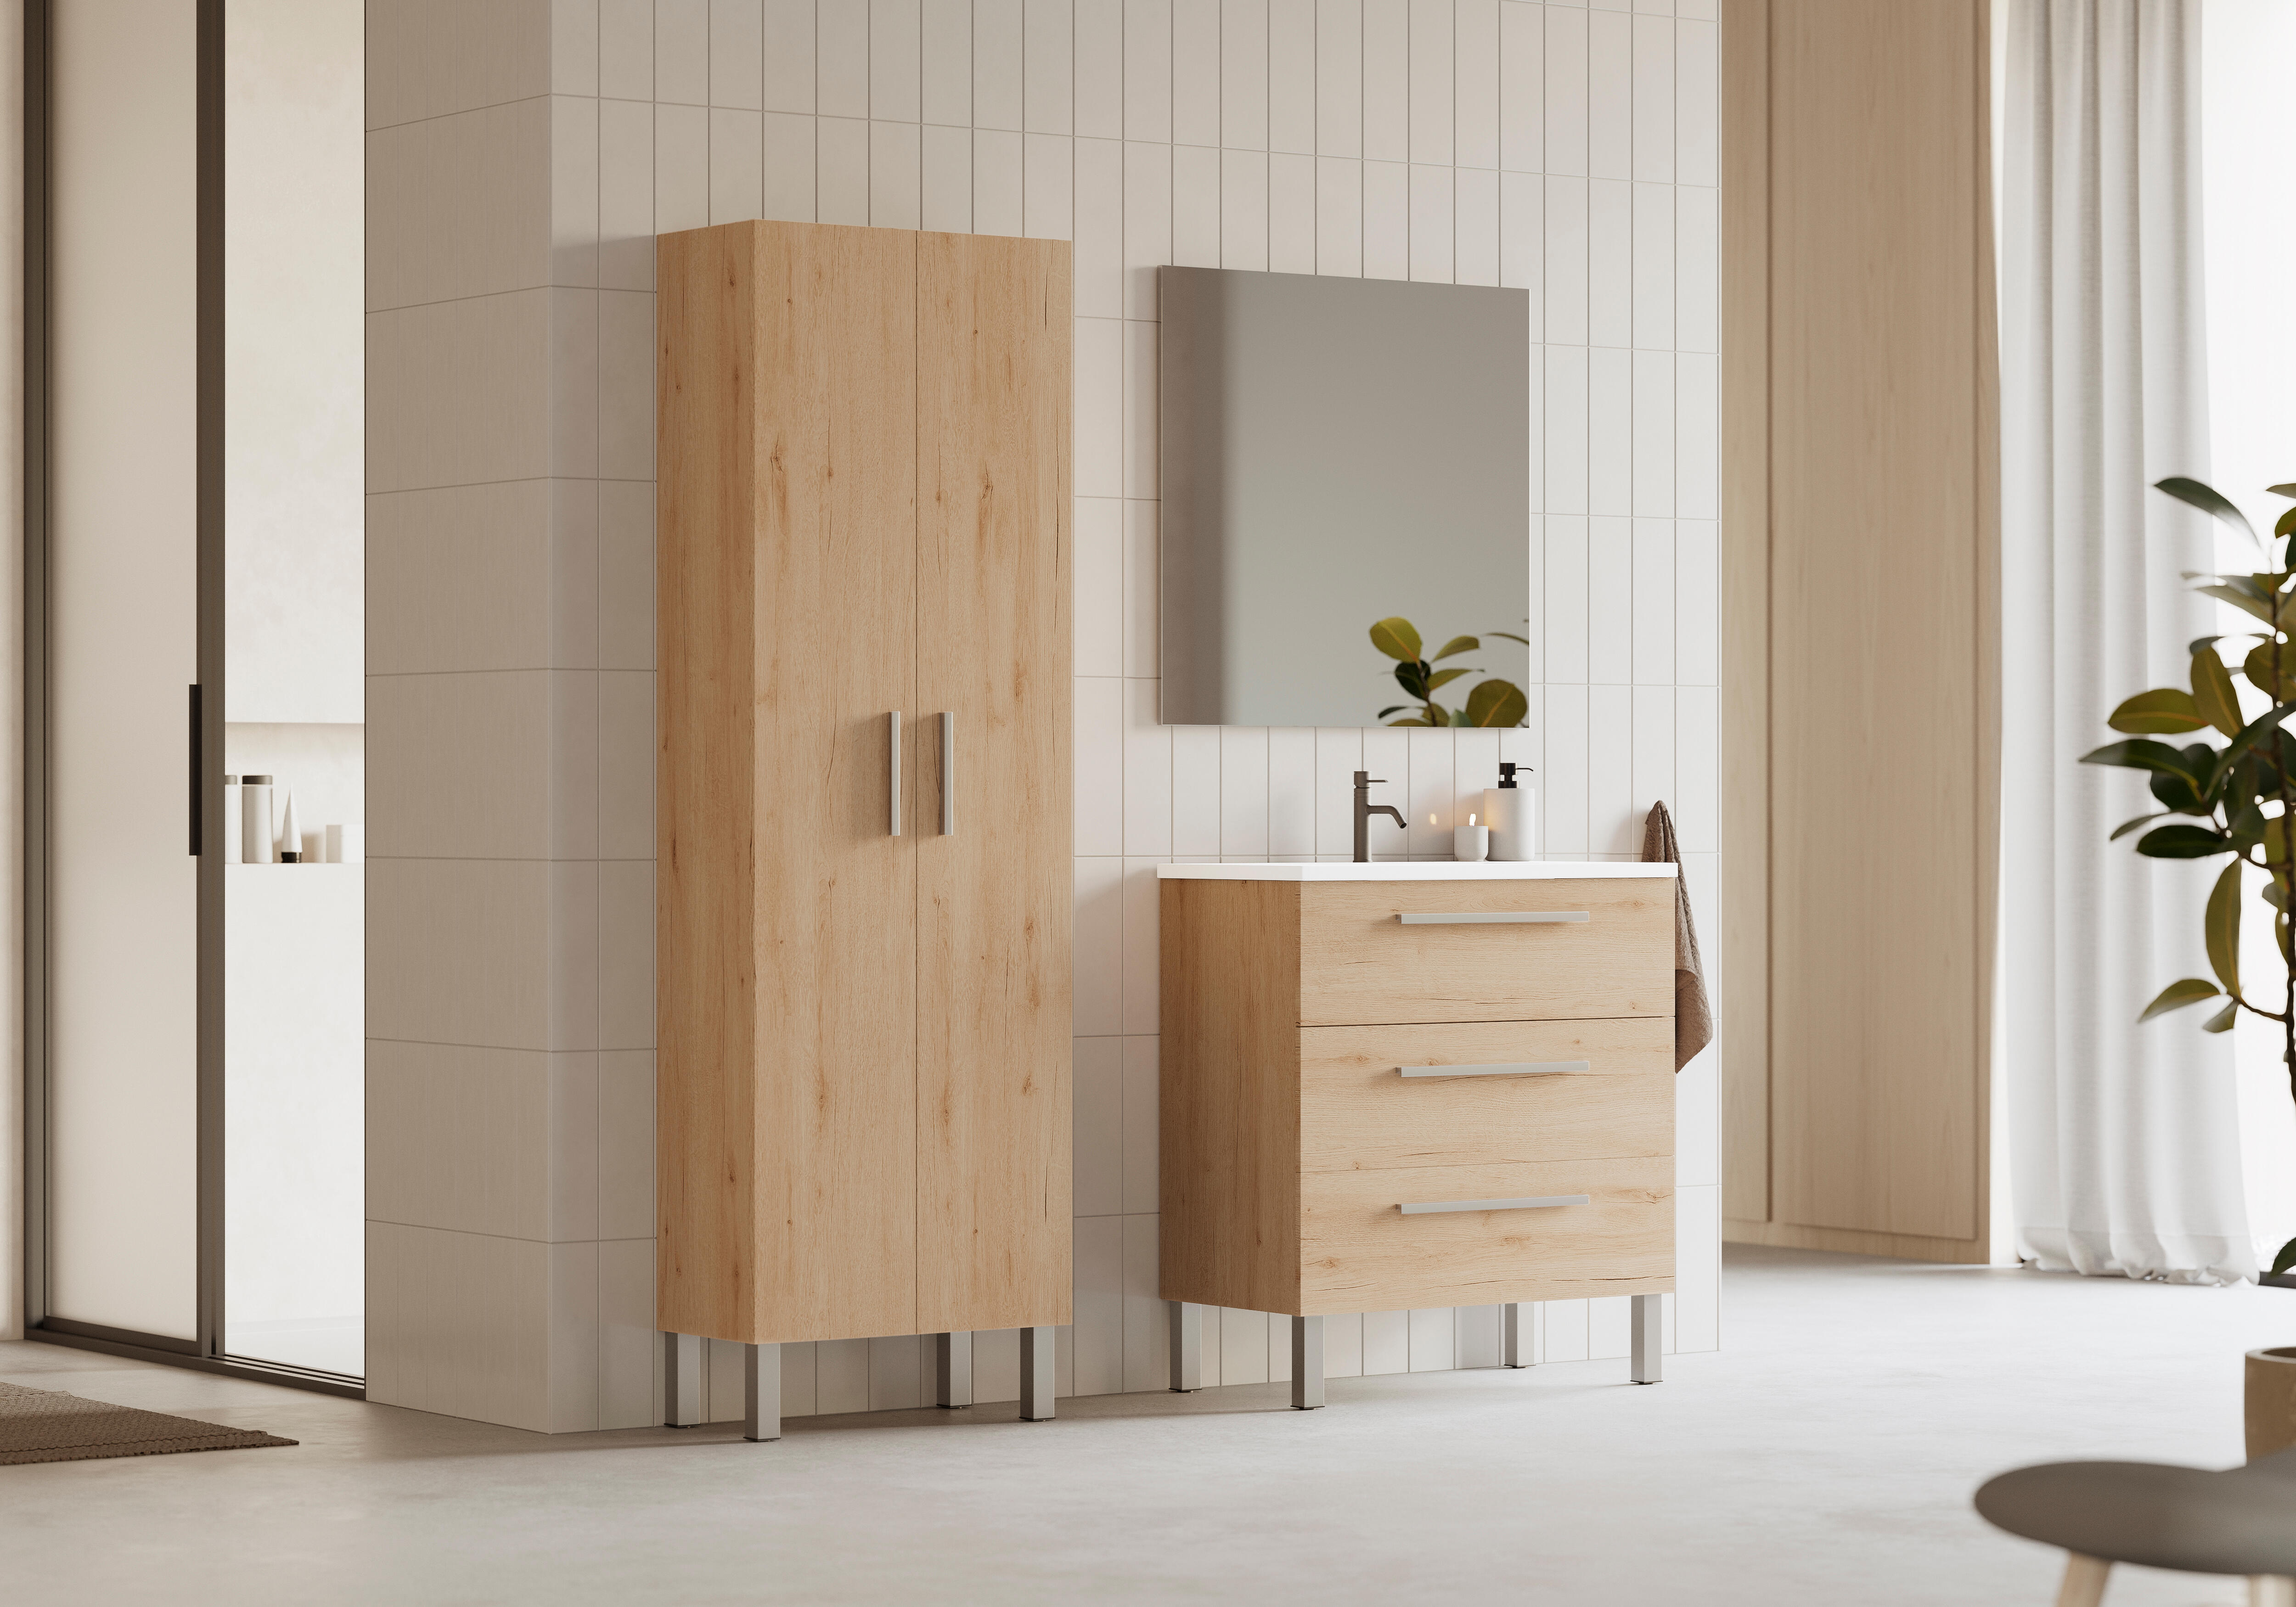 Mueble de baño con lavabo madrid roble 80x45 cm